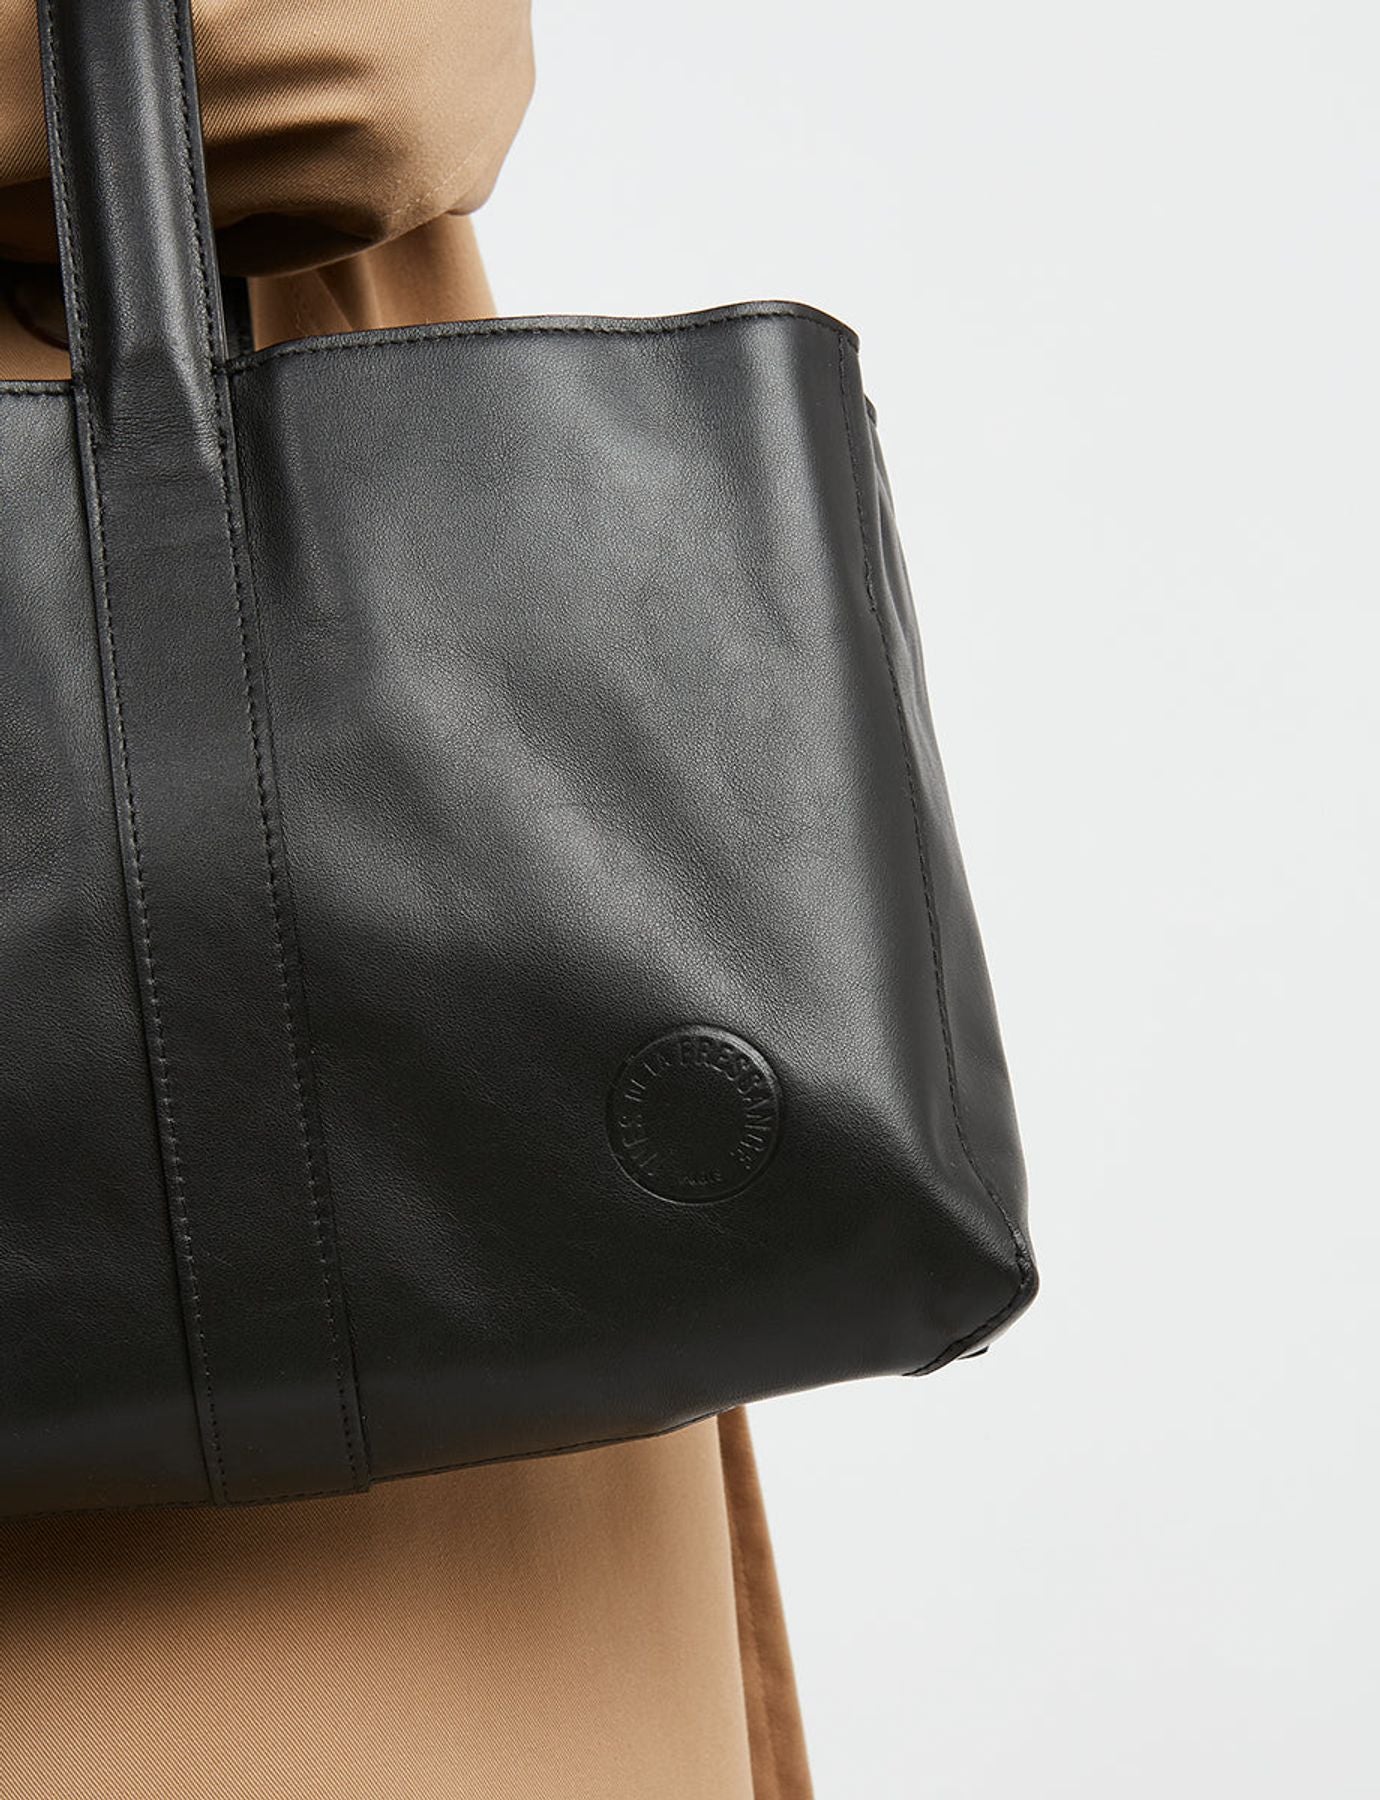 bag-leonore-size-s-leather-black